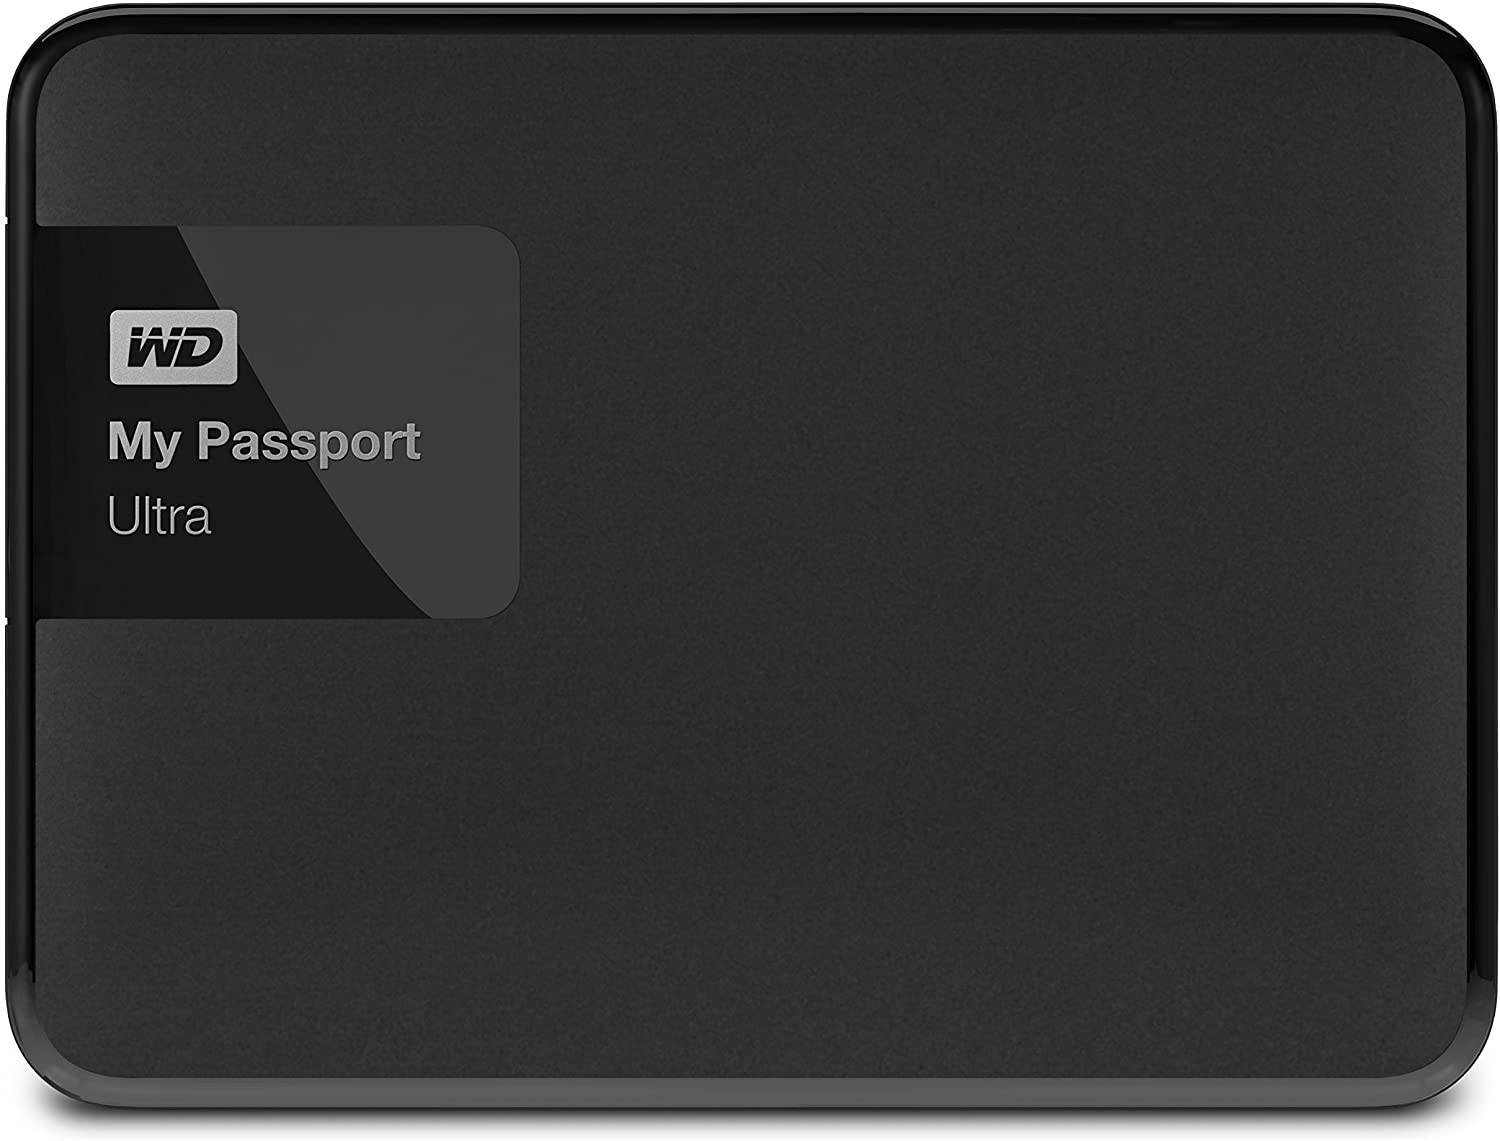 wd my passport slim for mac found new hardware screen isn